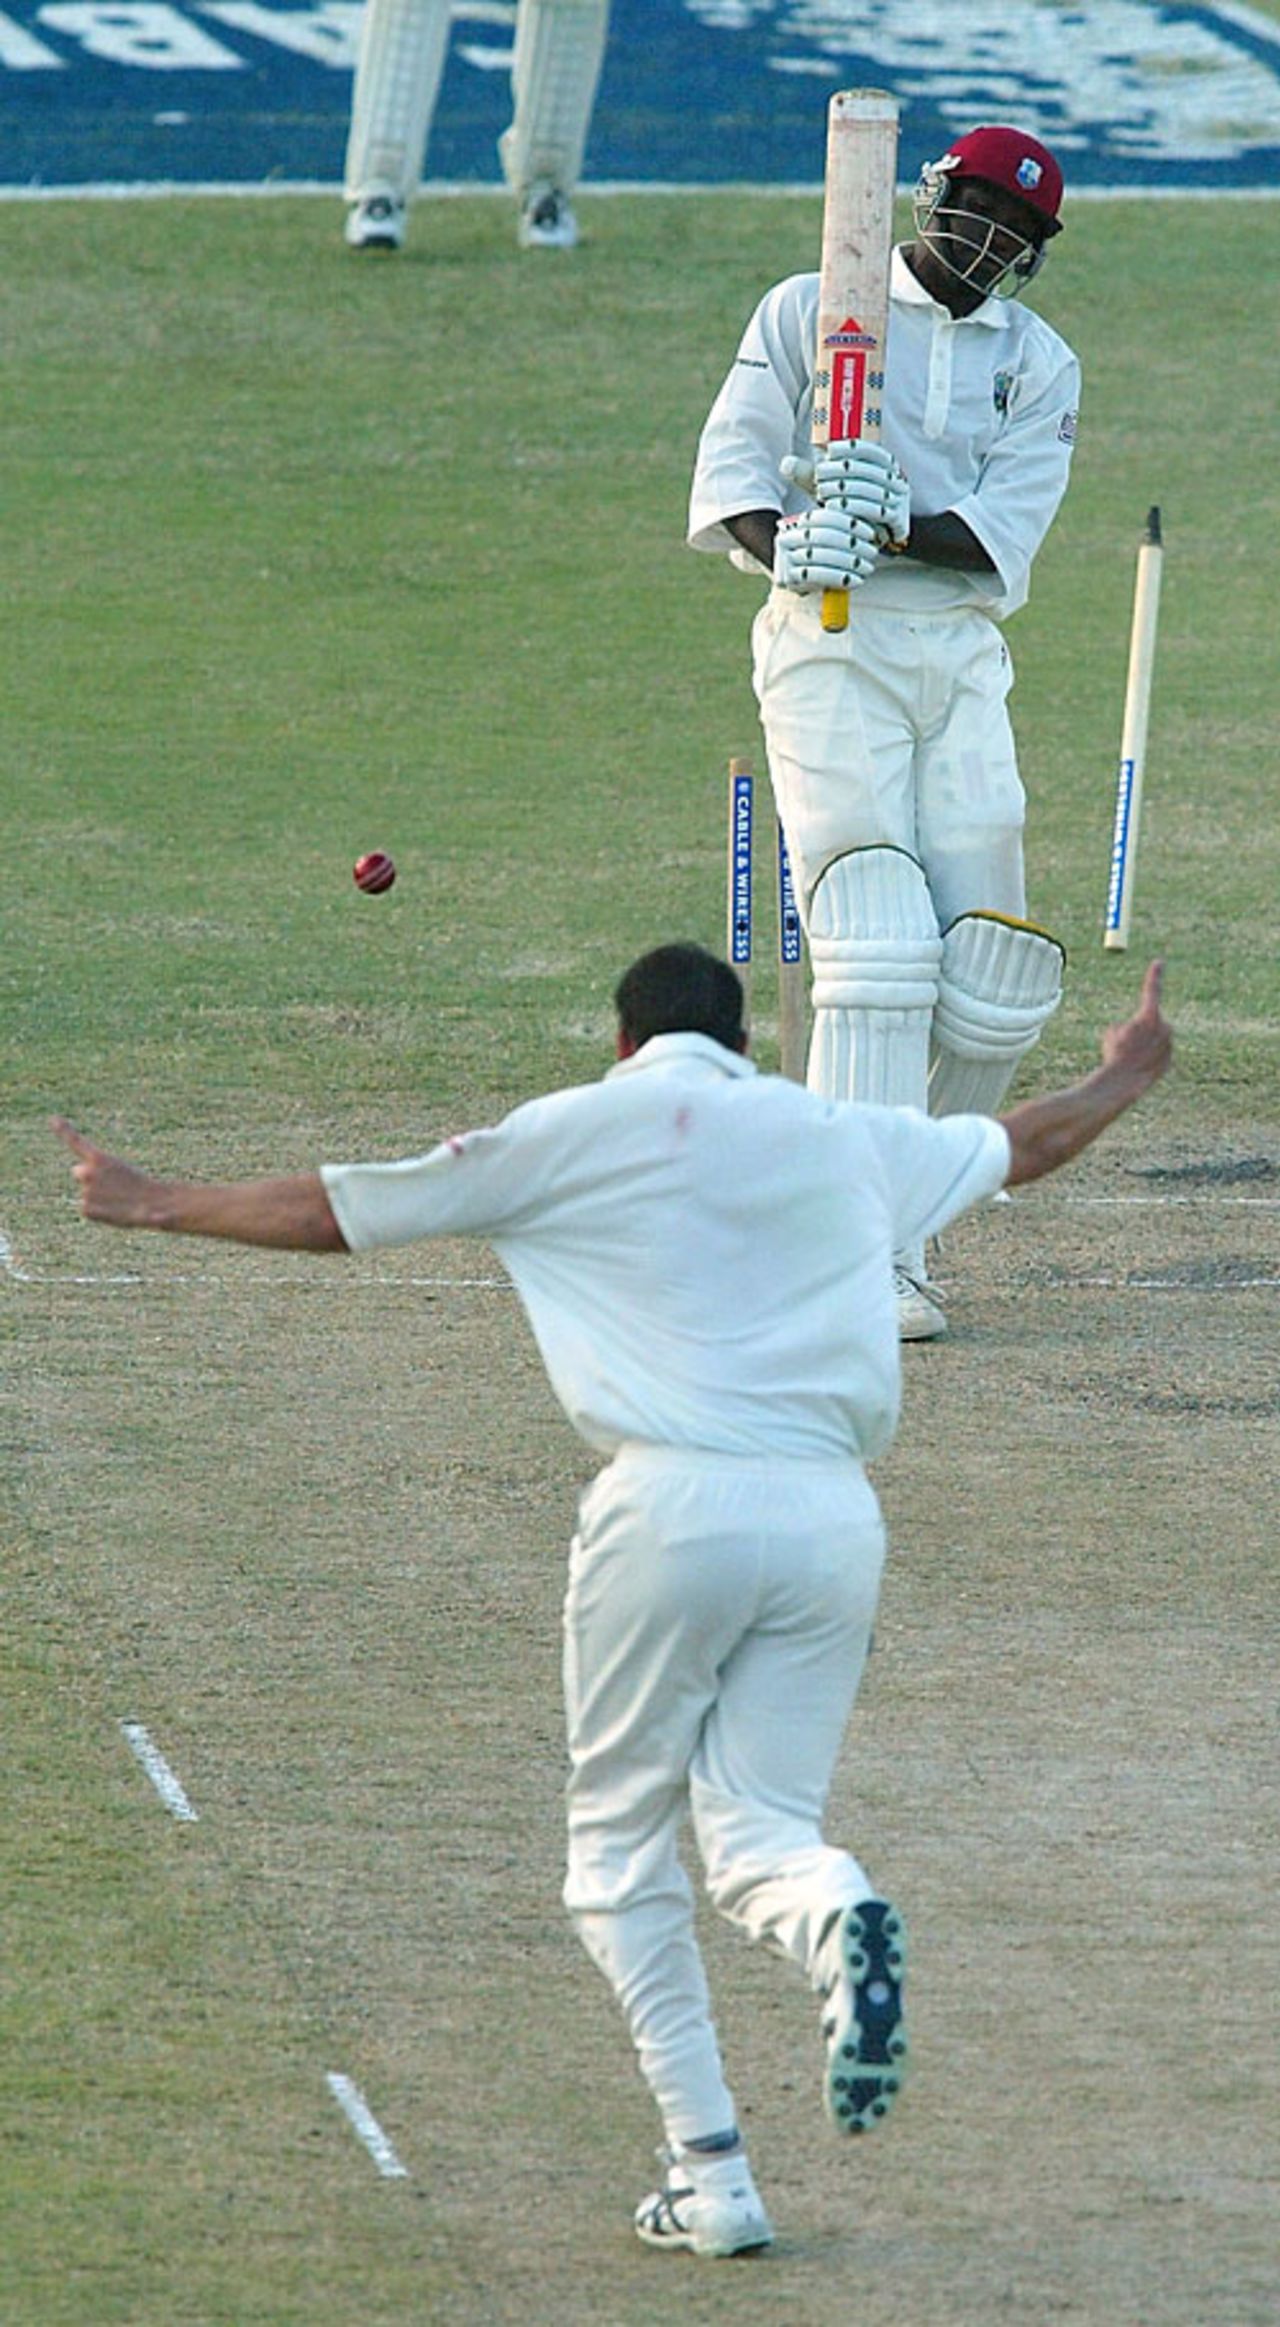 Three card trick - Steve Harmison cleans up Chris Gayle, West Indies v England, 3rd Test, Barbados, April 2, 2004